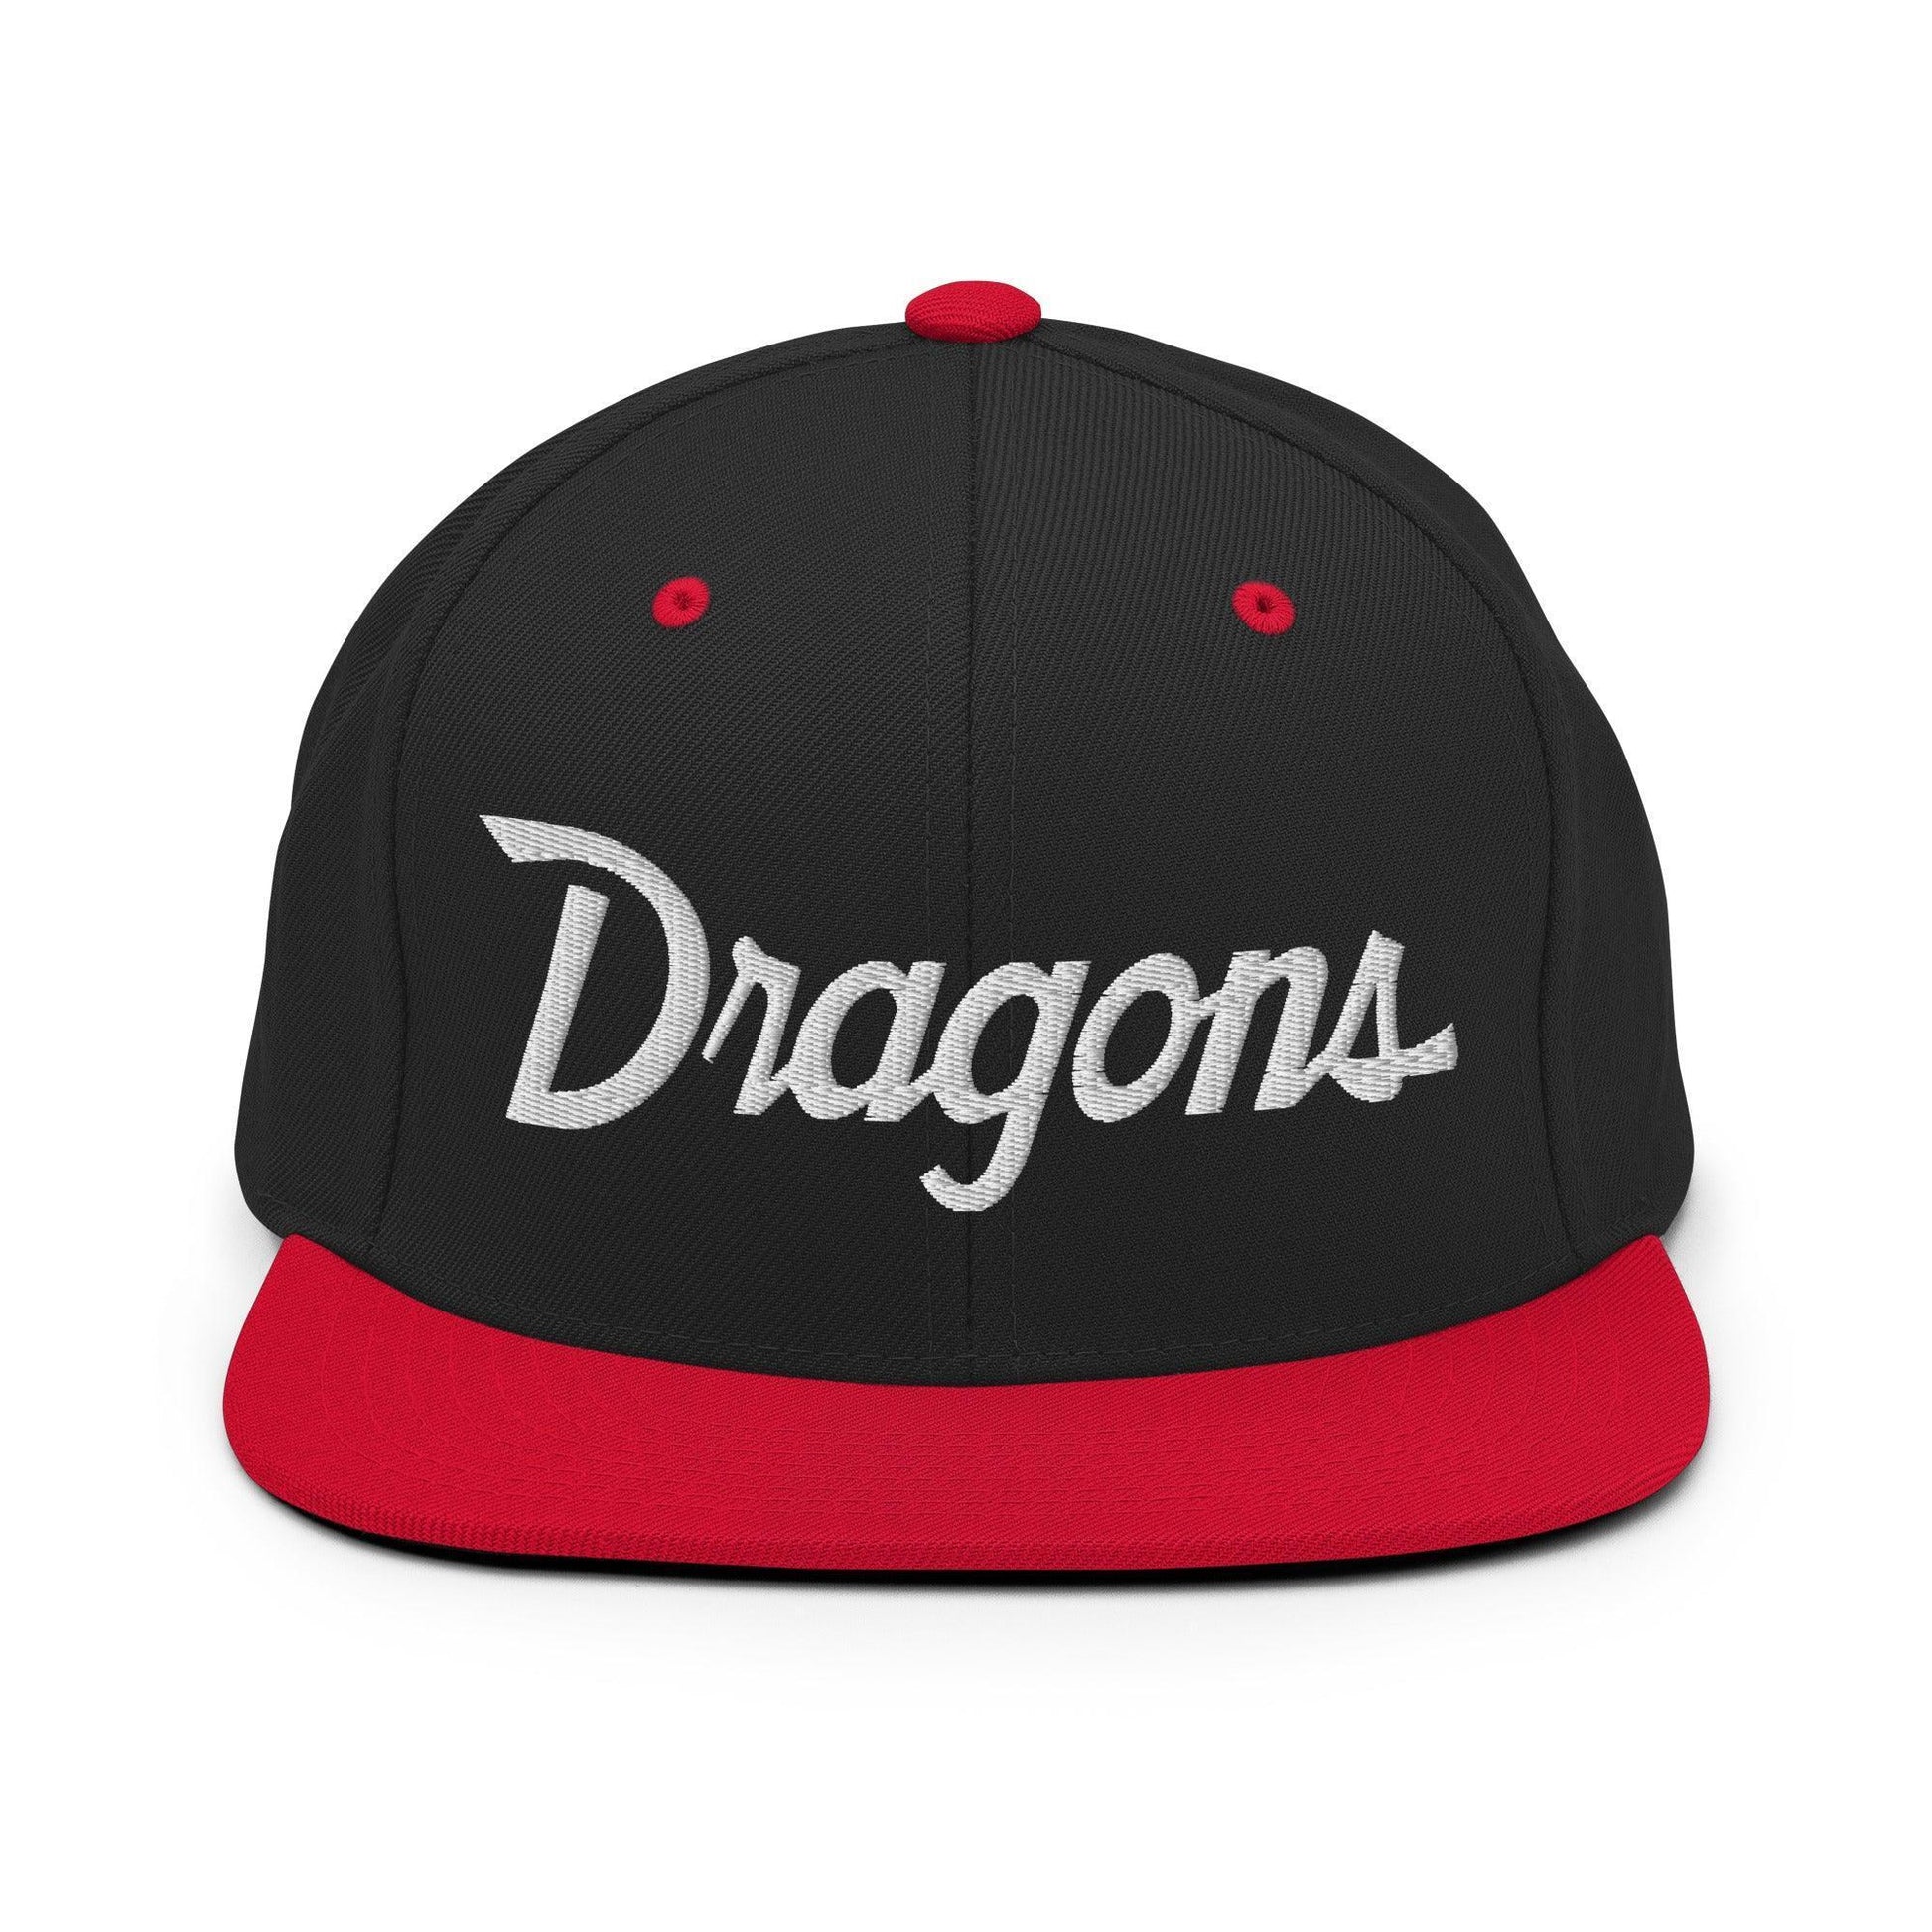 Dragons School Mascot Snapback Hat Black/ Red